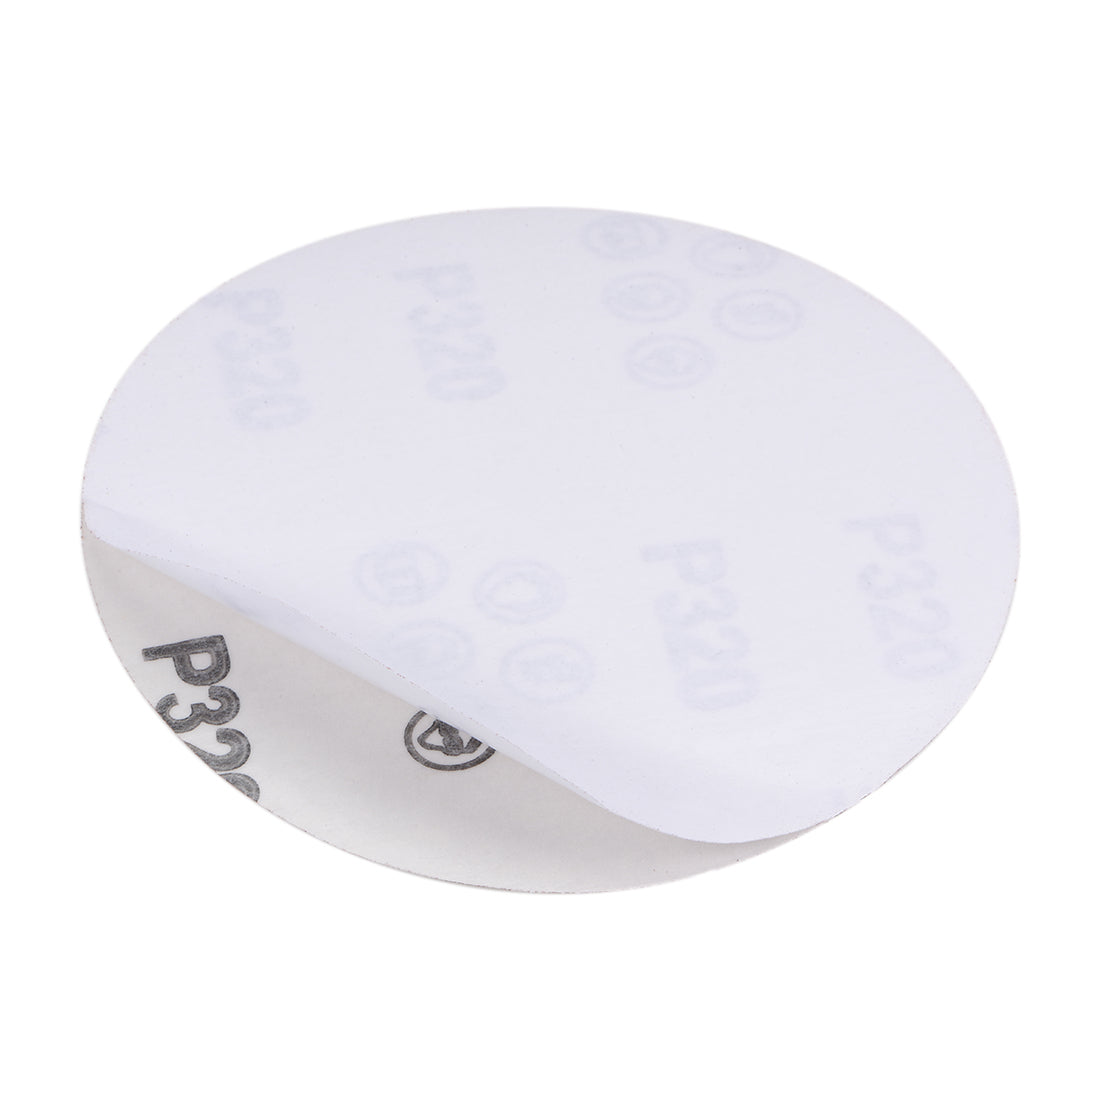 uxcell Uxcell 5-Inch PSA Sanding Disc Aluminum Oxide Adhesive Back Sandpaper 320 Grit 10 Pcs